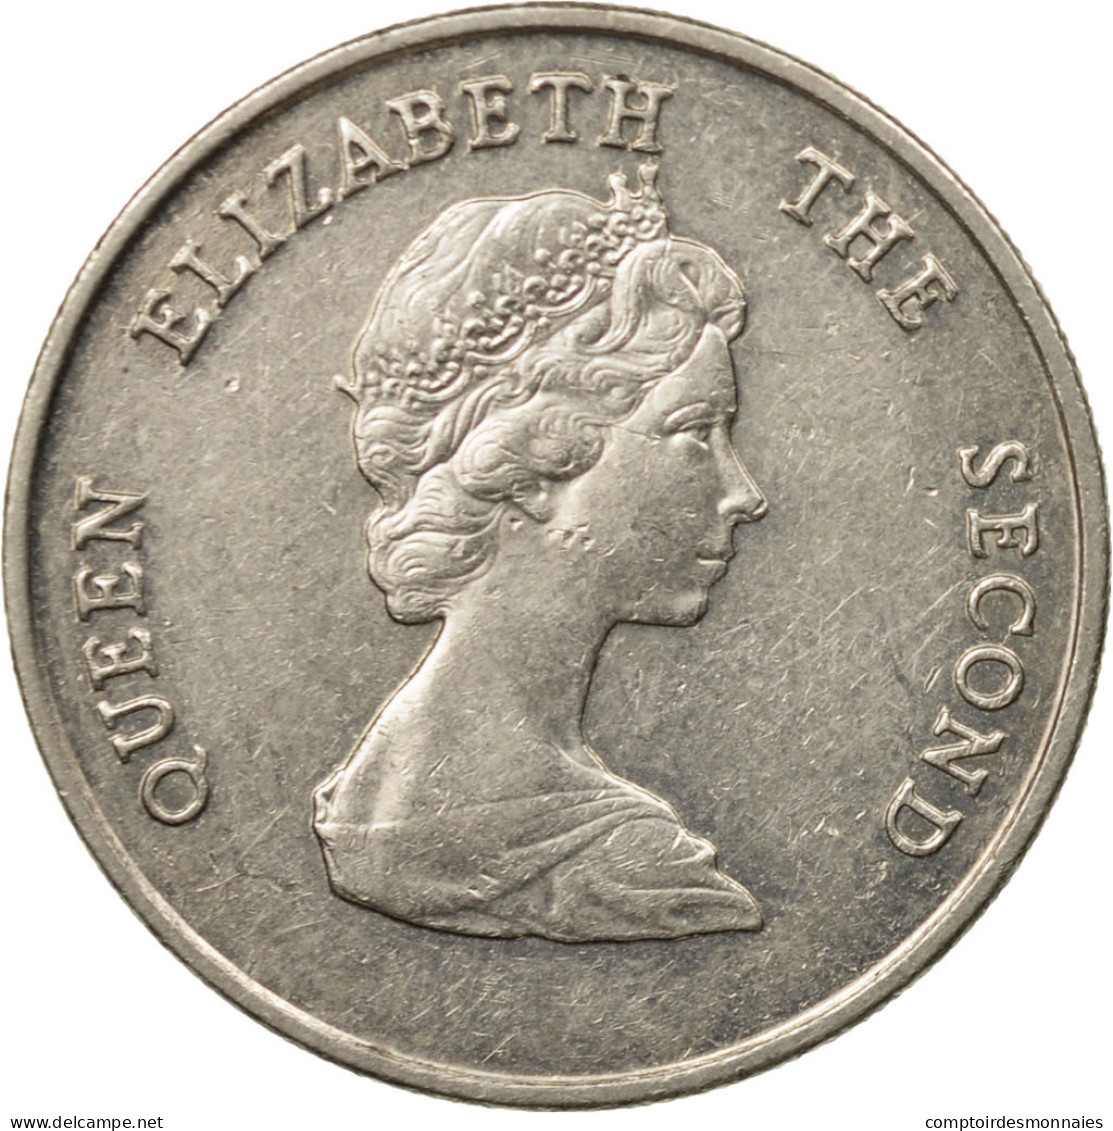 Monnaie, Etats Des Caraibes Orientales, Elizabeth II, 25 Cents, 1995, TTB - Britse Caribische Gebieden